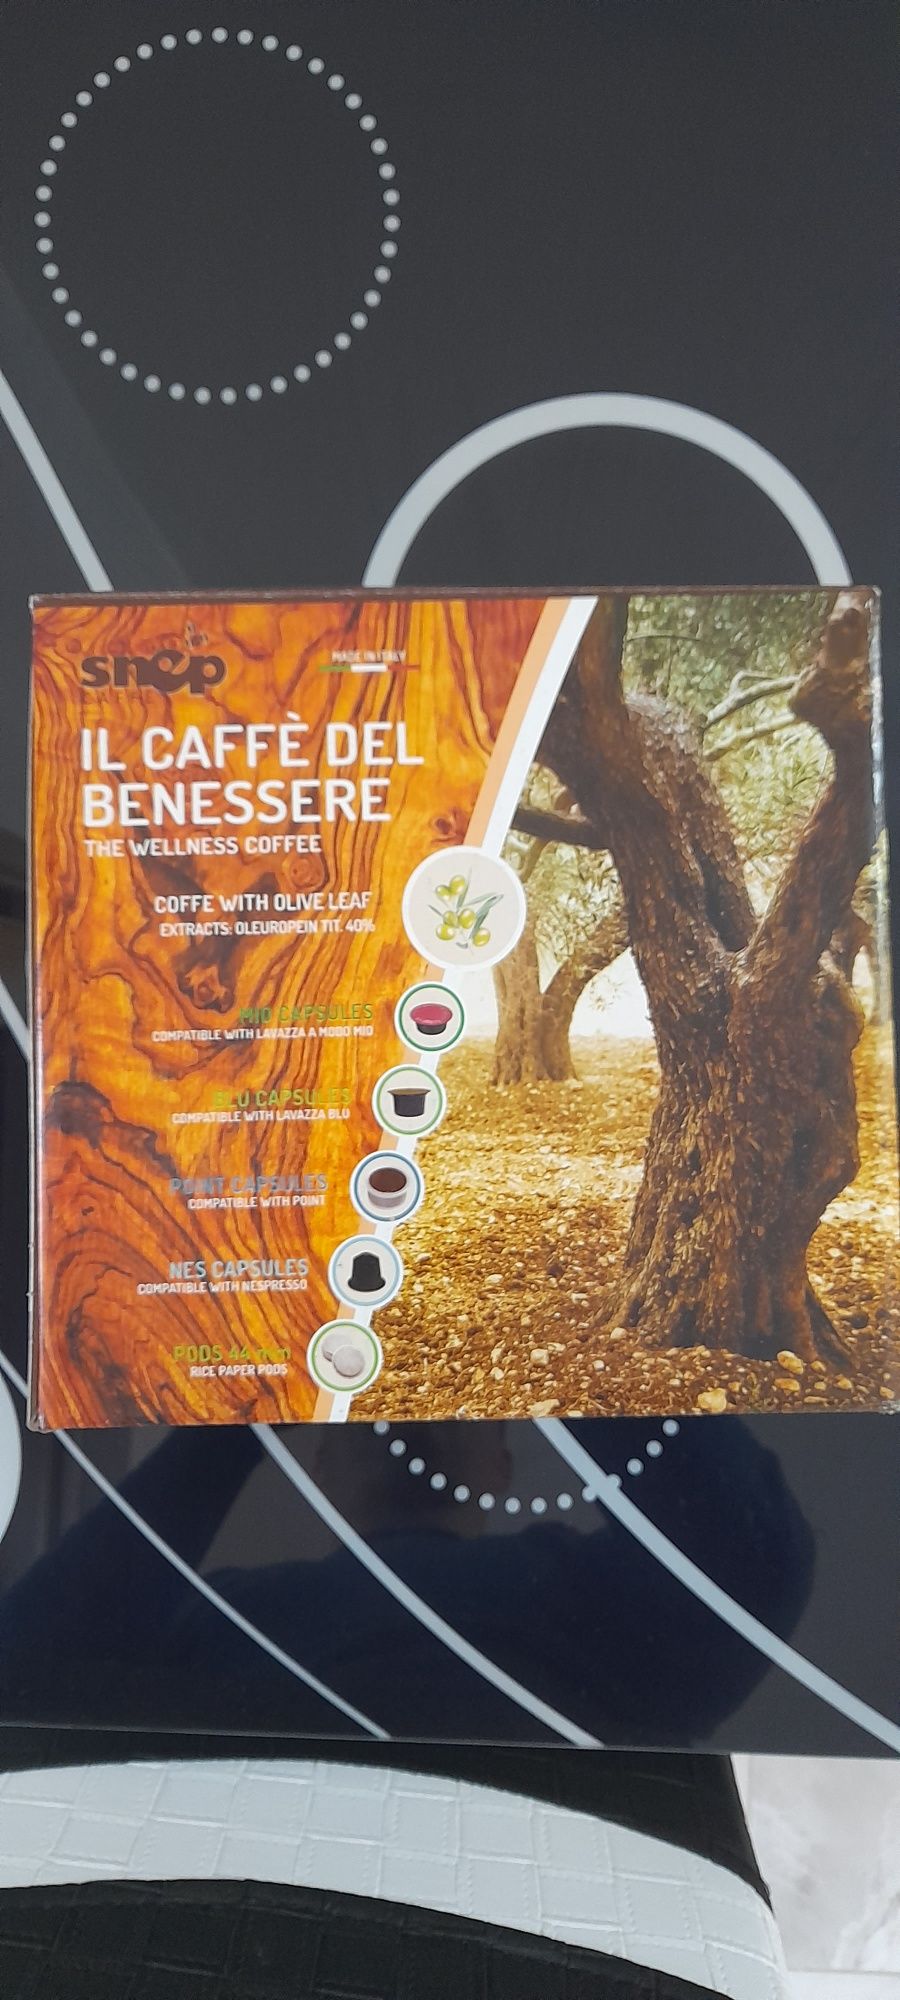 Cafea Snep Italia ganoderma paduri 44 mm